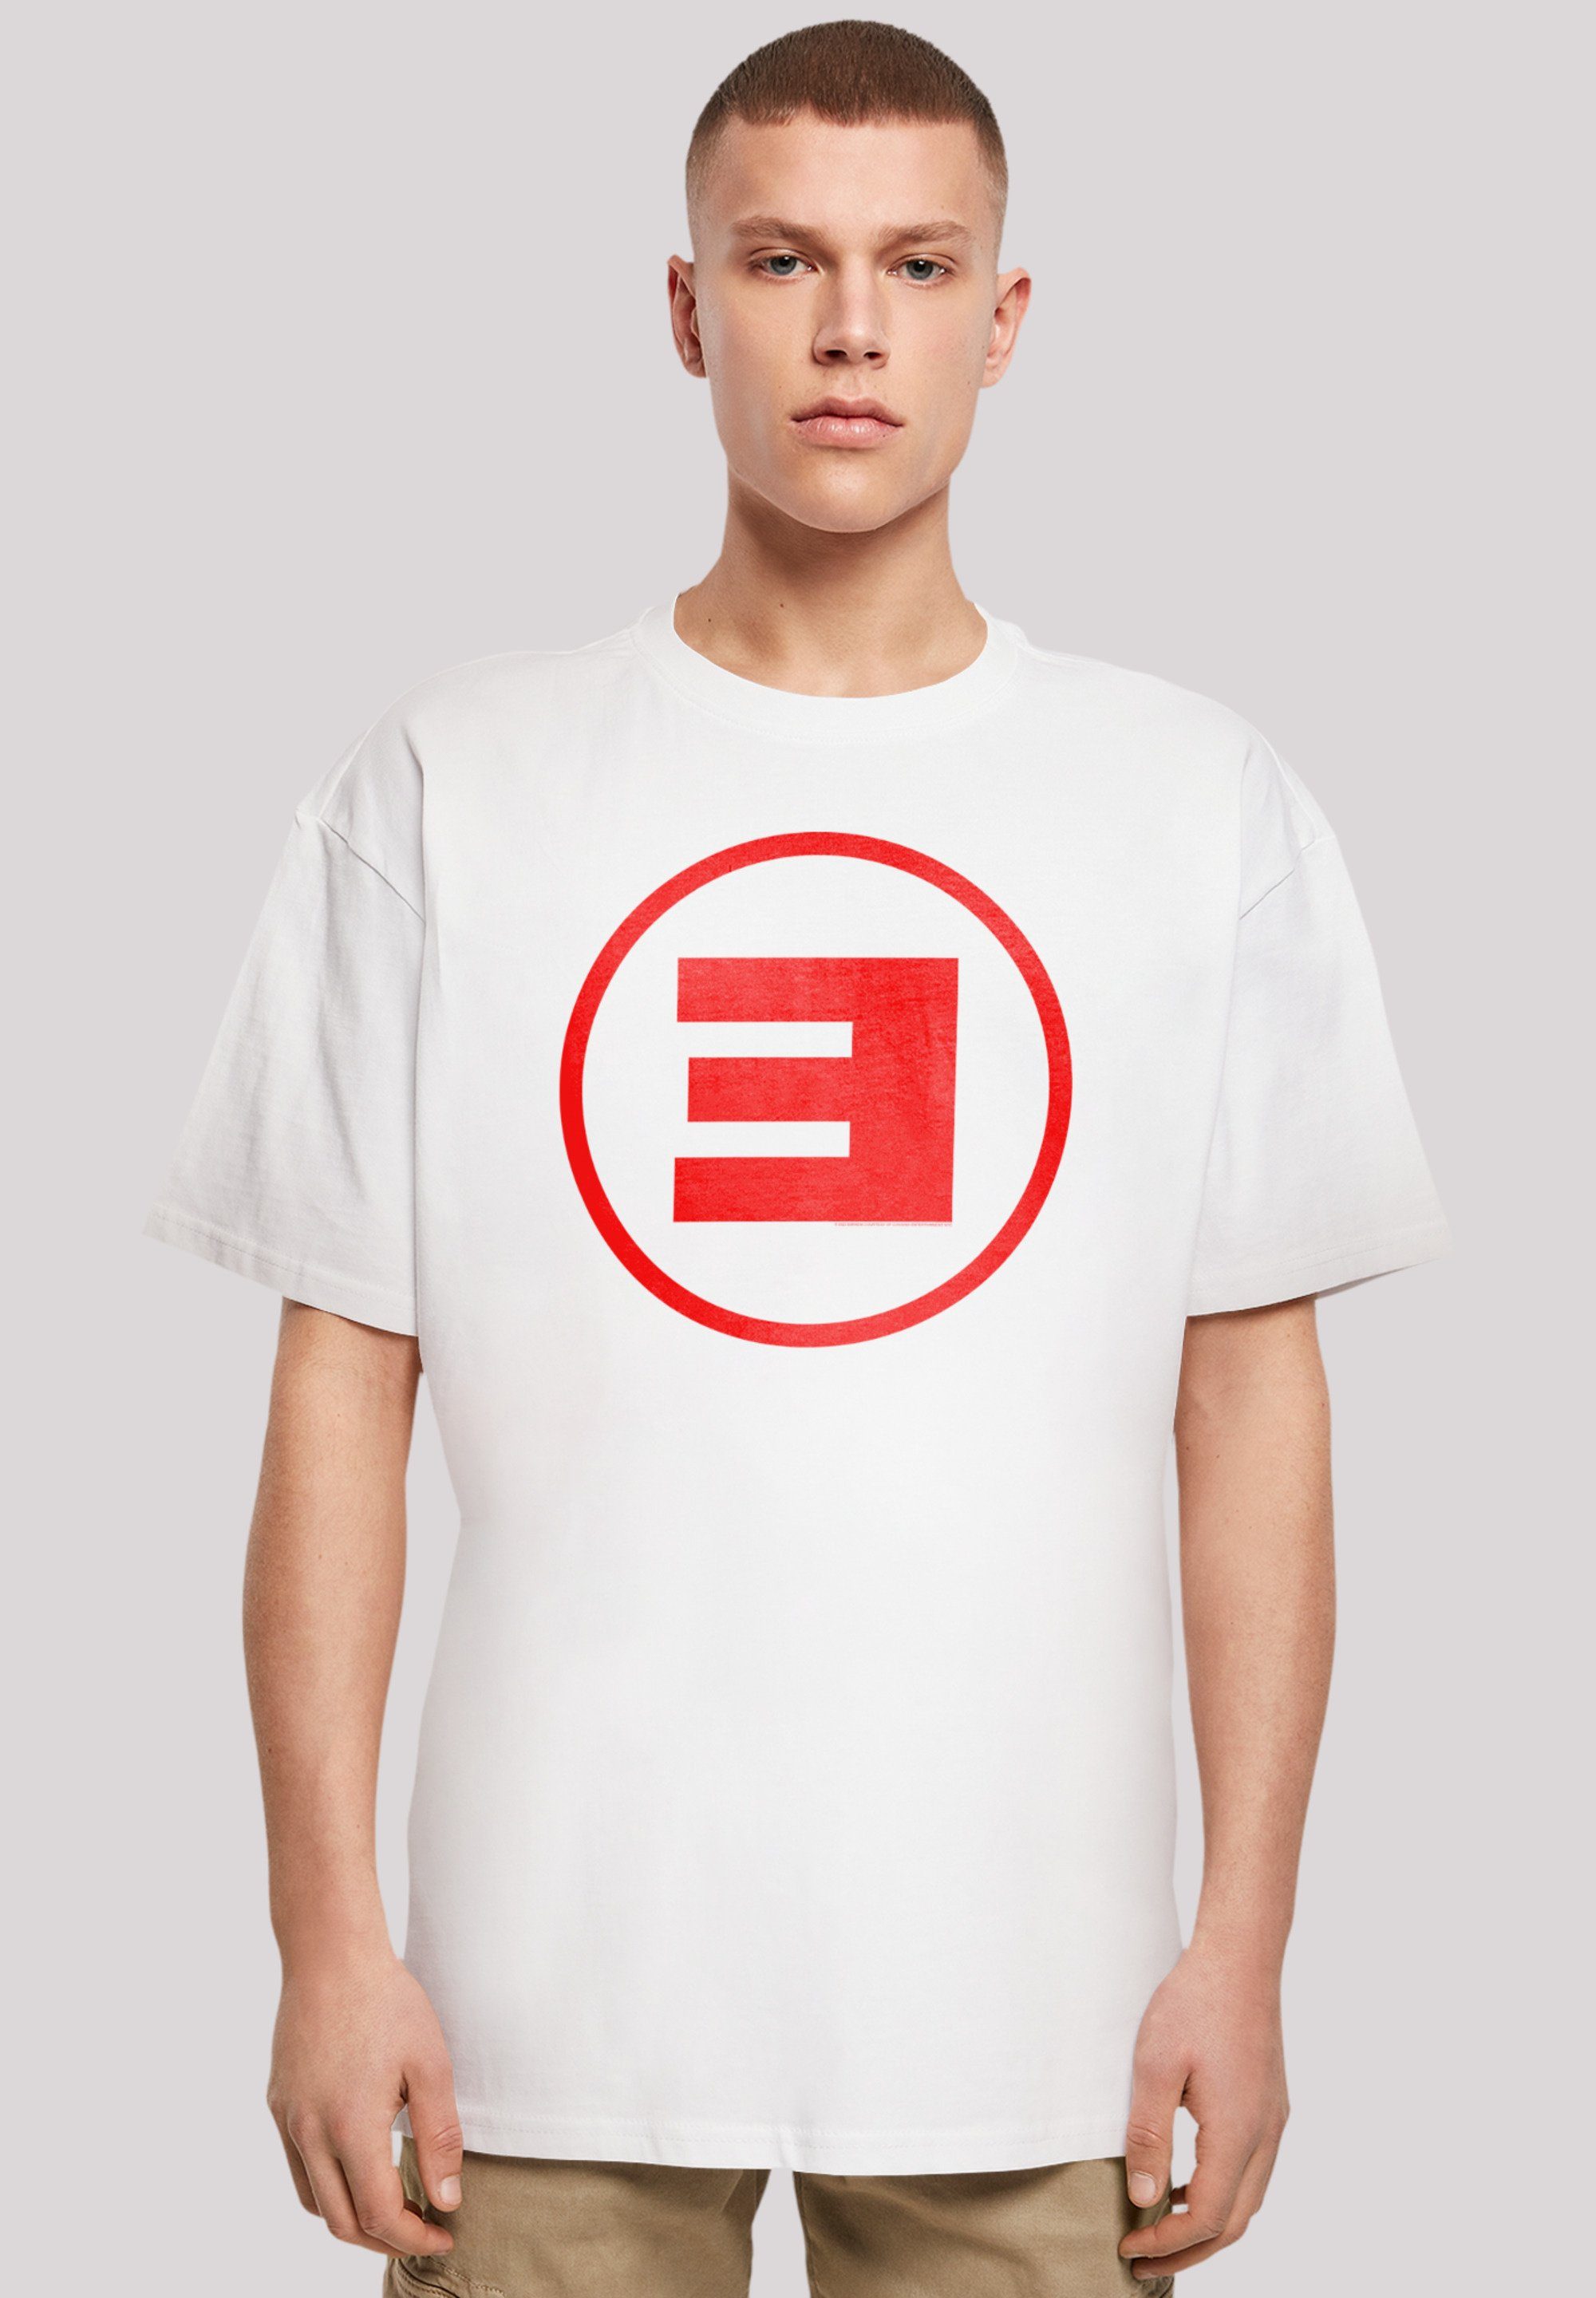 Qualität, Circle Premium Hip Music Hop Eminem weiß T-Shirt By Off F4NT4STIC Rap E Rock Musik,